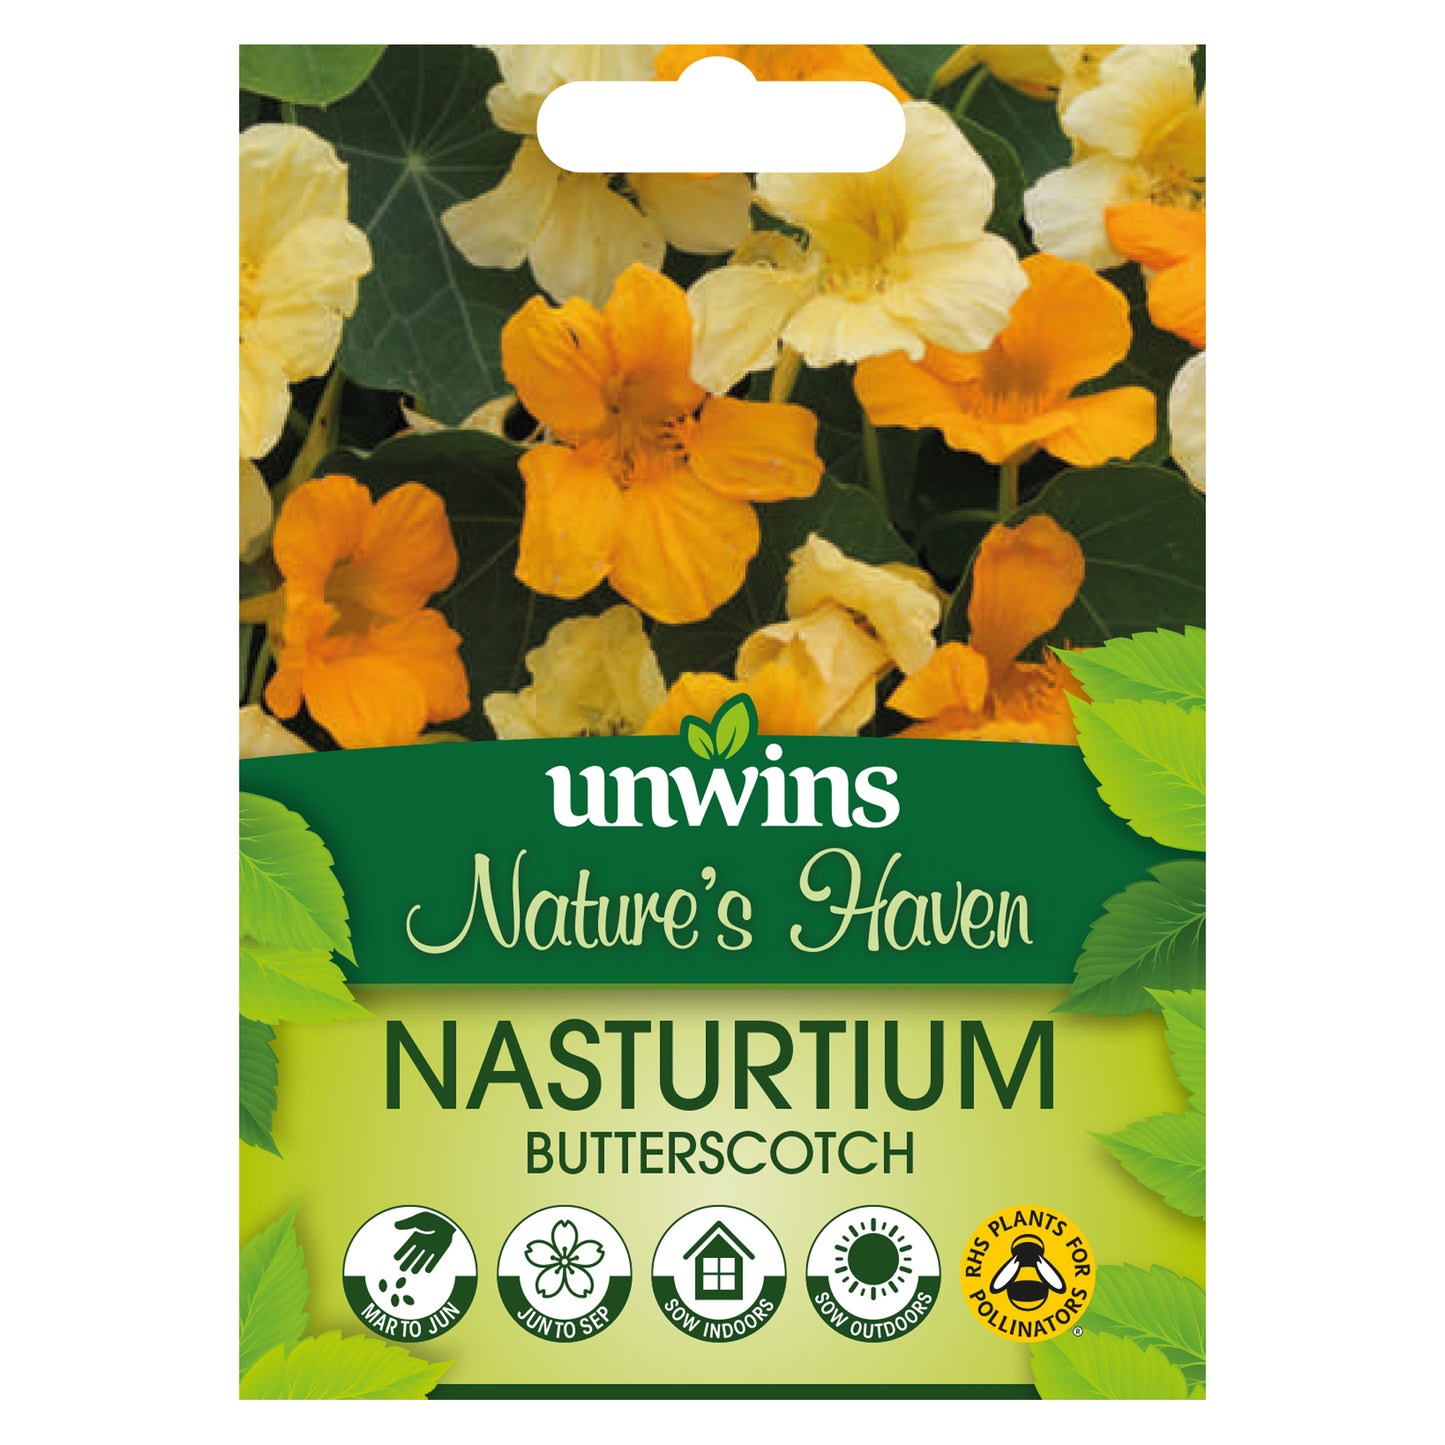 Nature's Haven Nasturtium Butterscotch Seeds front of pack